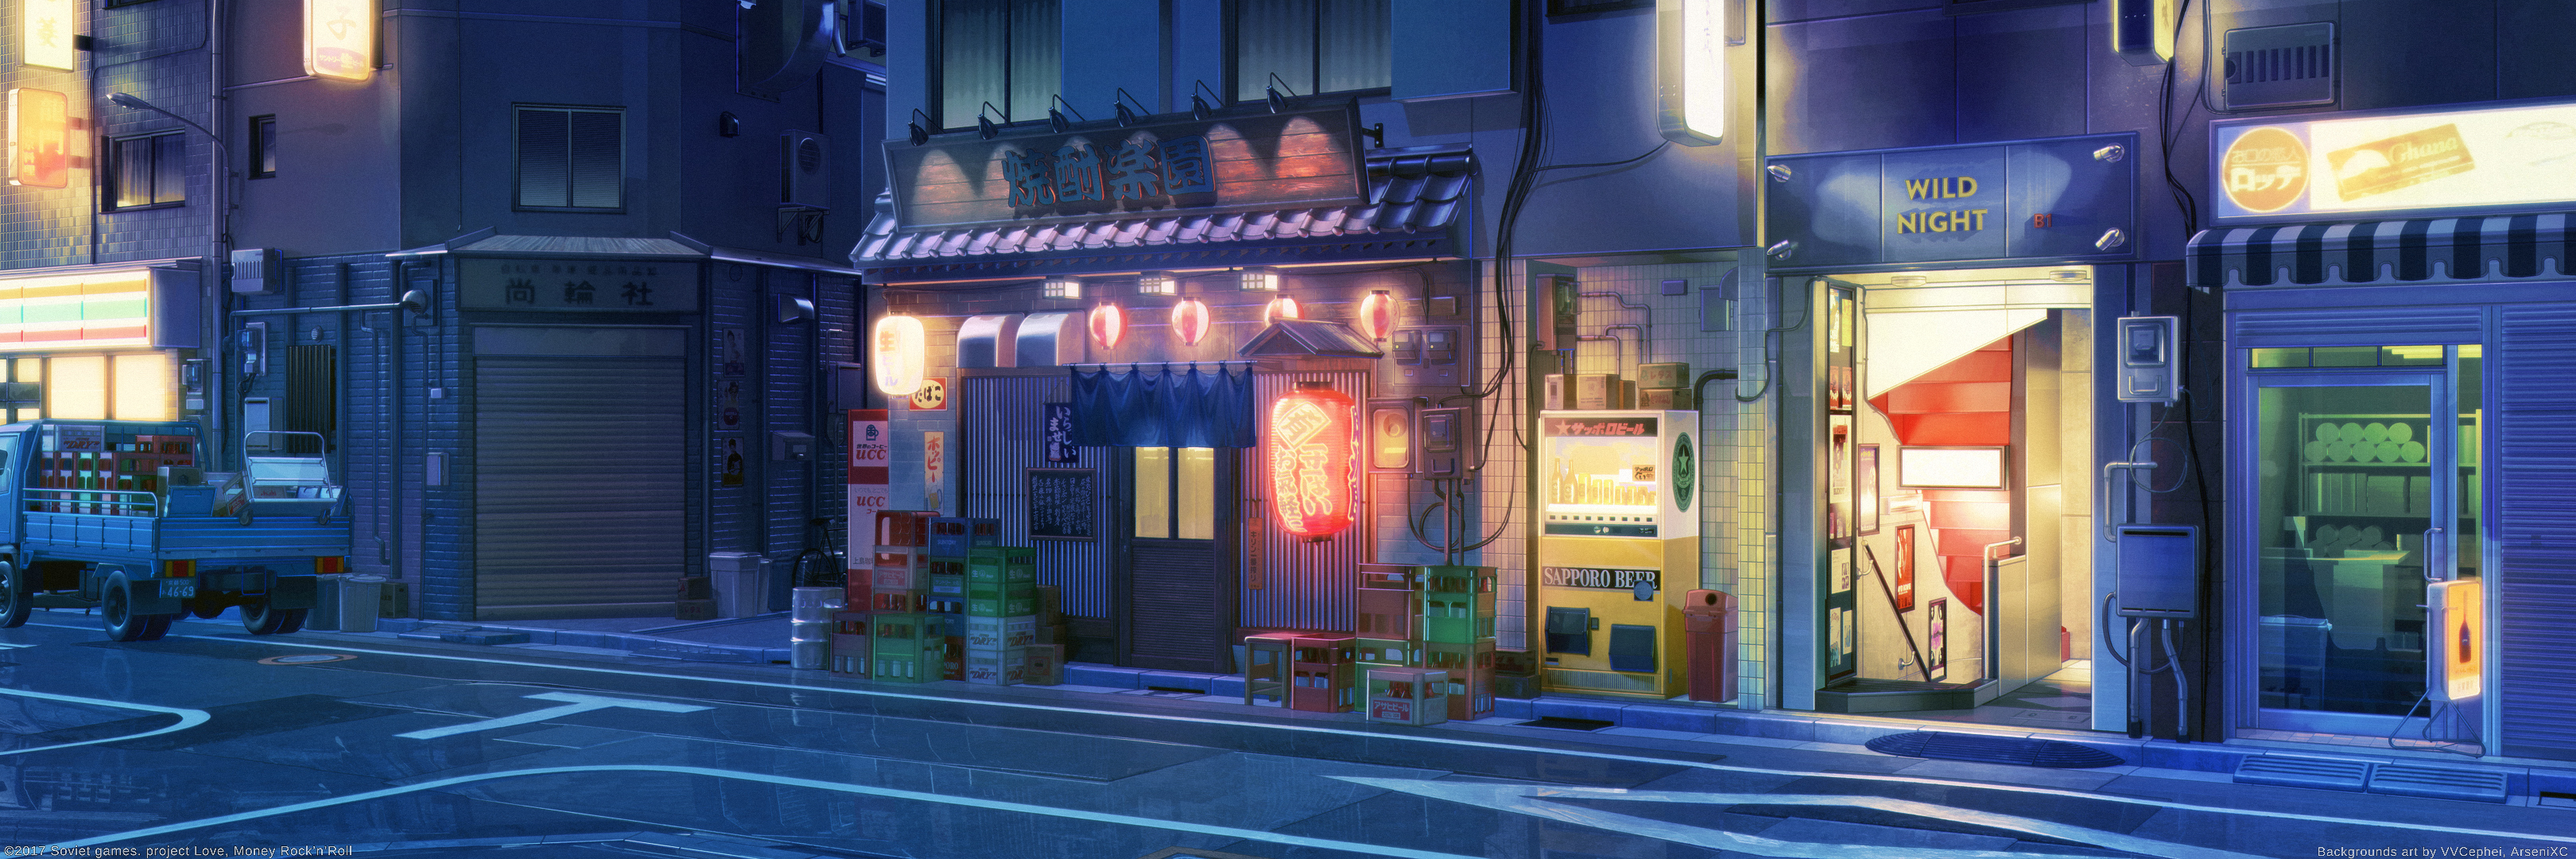 street, anime, shop, lantern, light, night, store